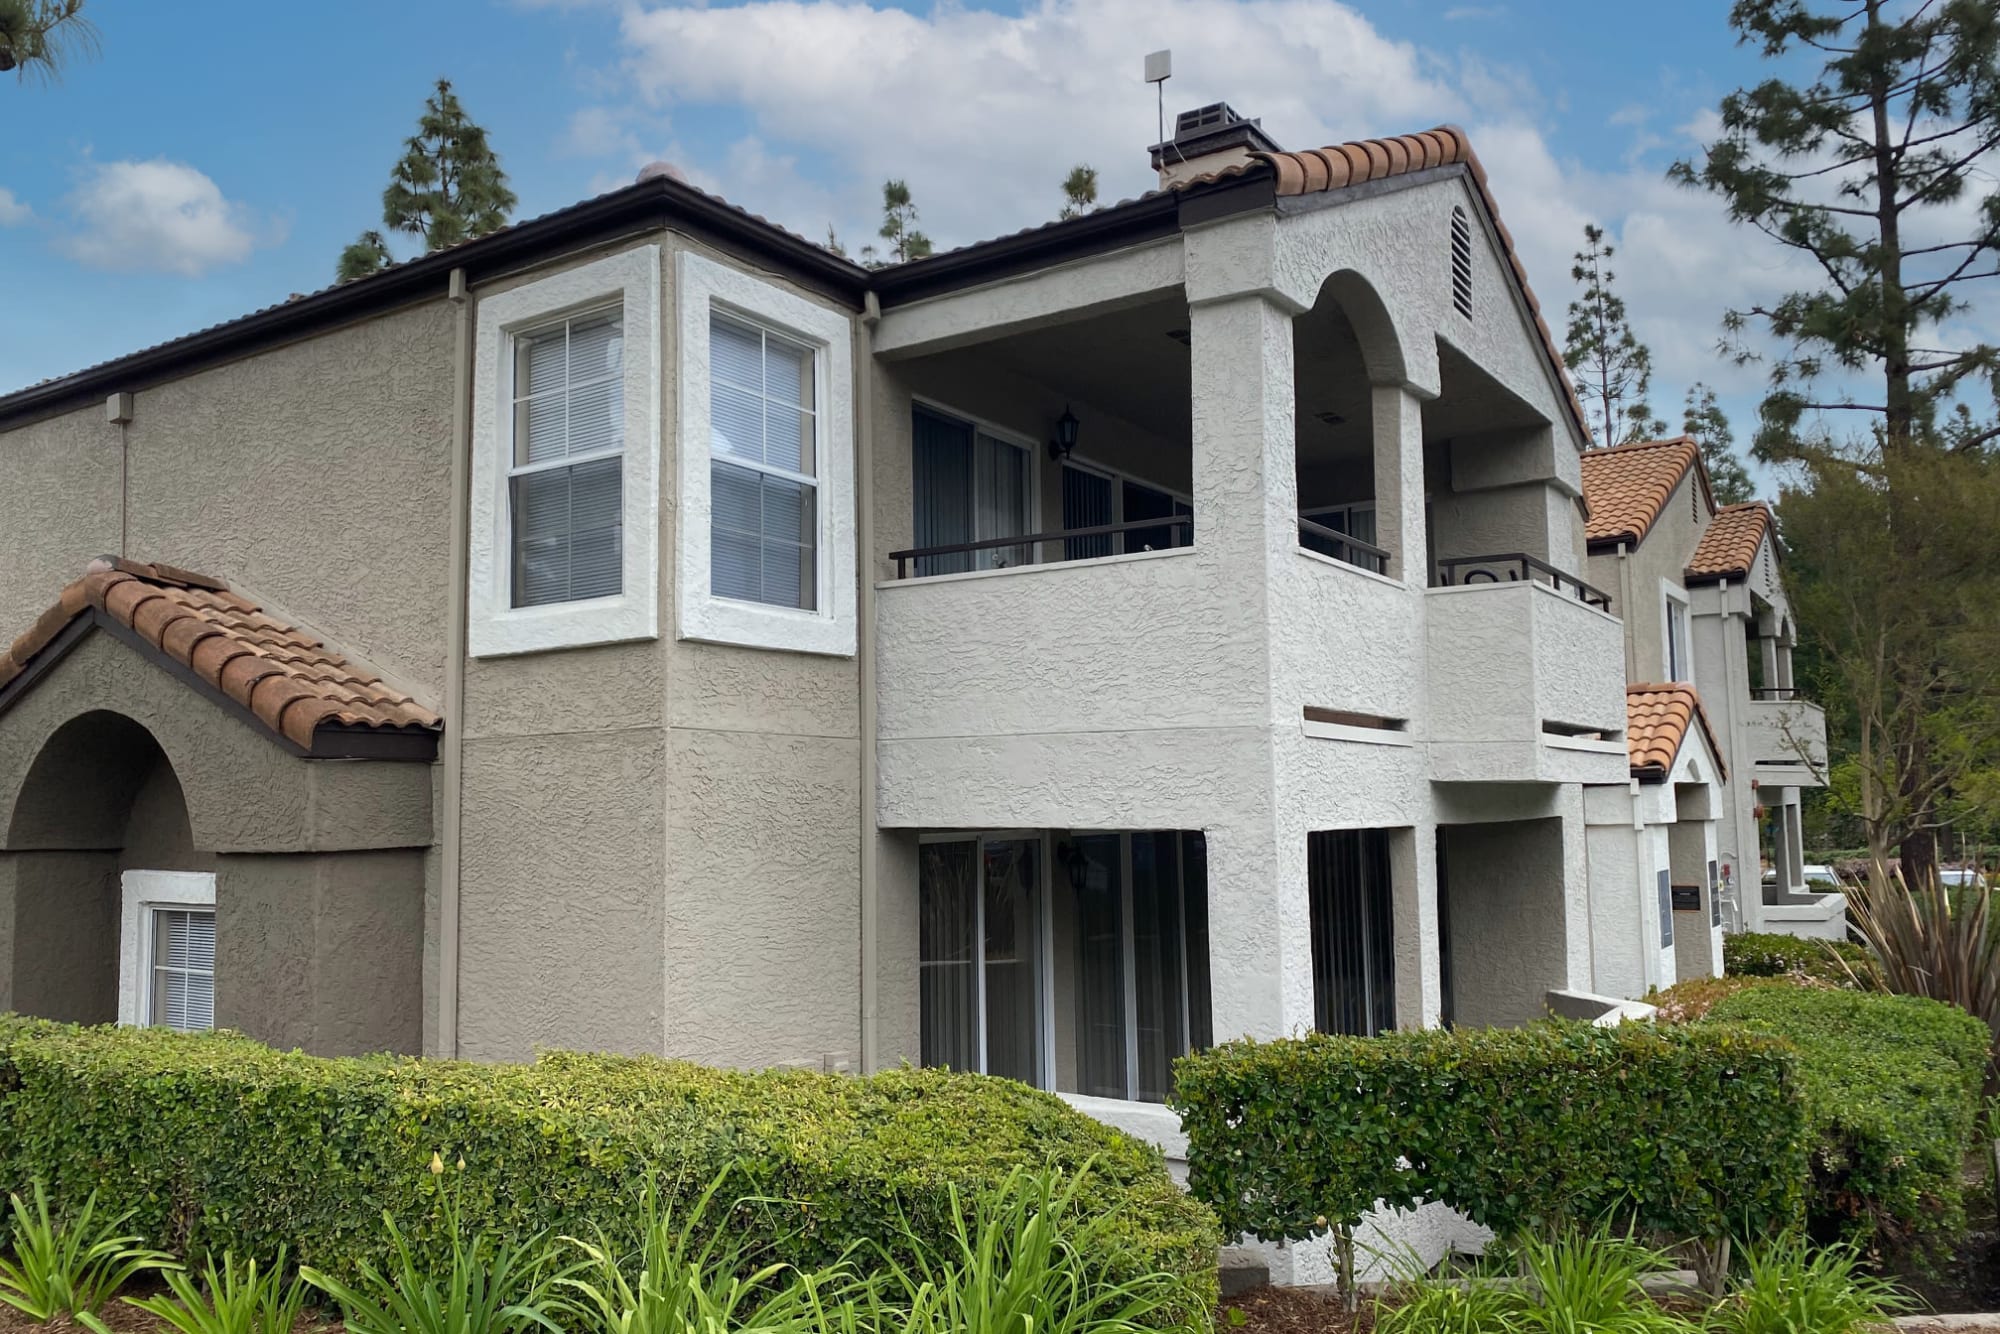 Exterior Building - New Paint at Sierra Del Oro Apartments in Corona, California